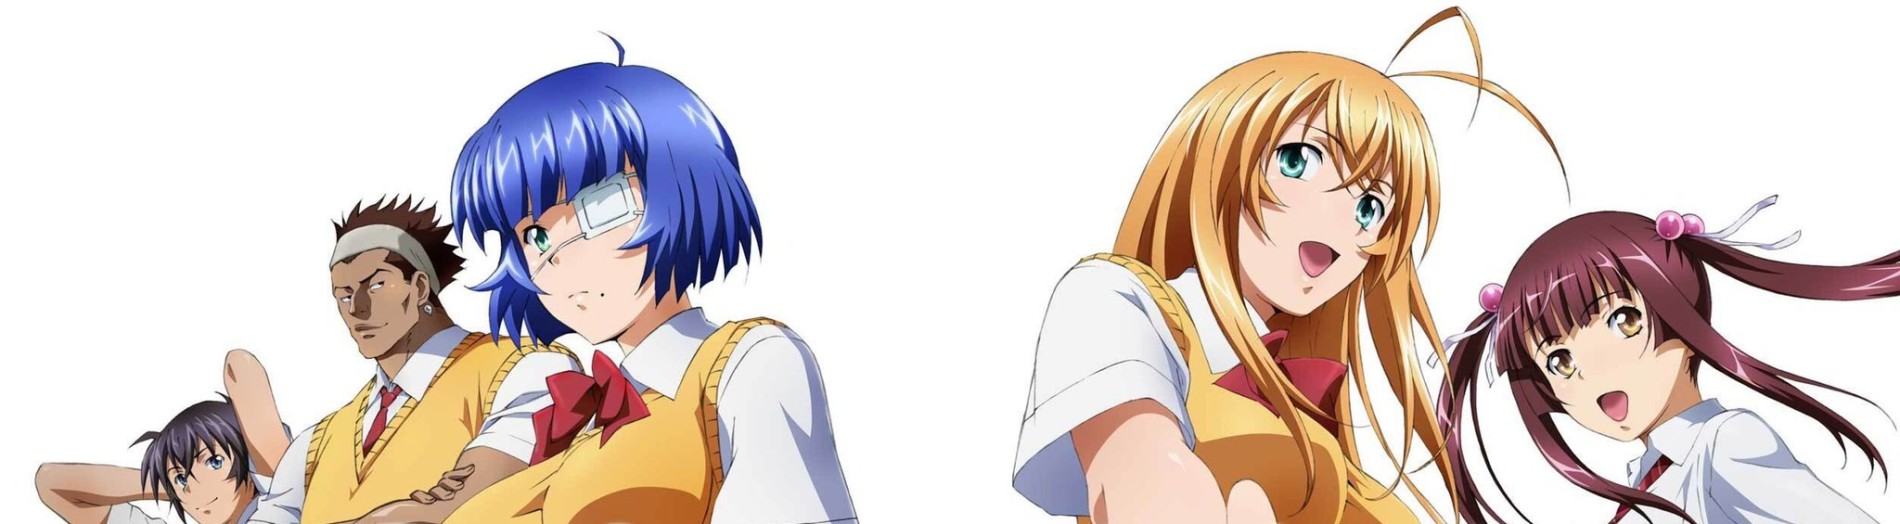 ANIME - The Shin Ikki Tousen TV anime begins spring 2022. (studio not  announced) Cast & teaser visual: - Chubo Sonken (CV: Ayaka Ohashi) -  Asaemon Yamada (CV: Atsumi Tanezaki)